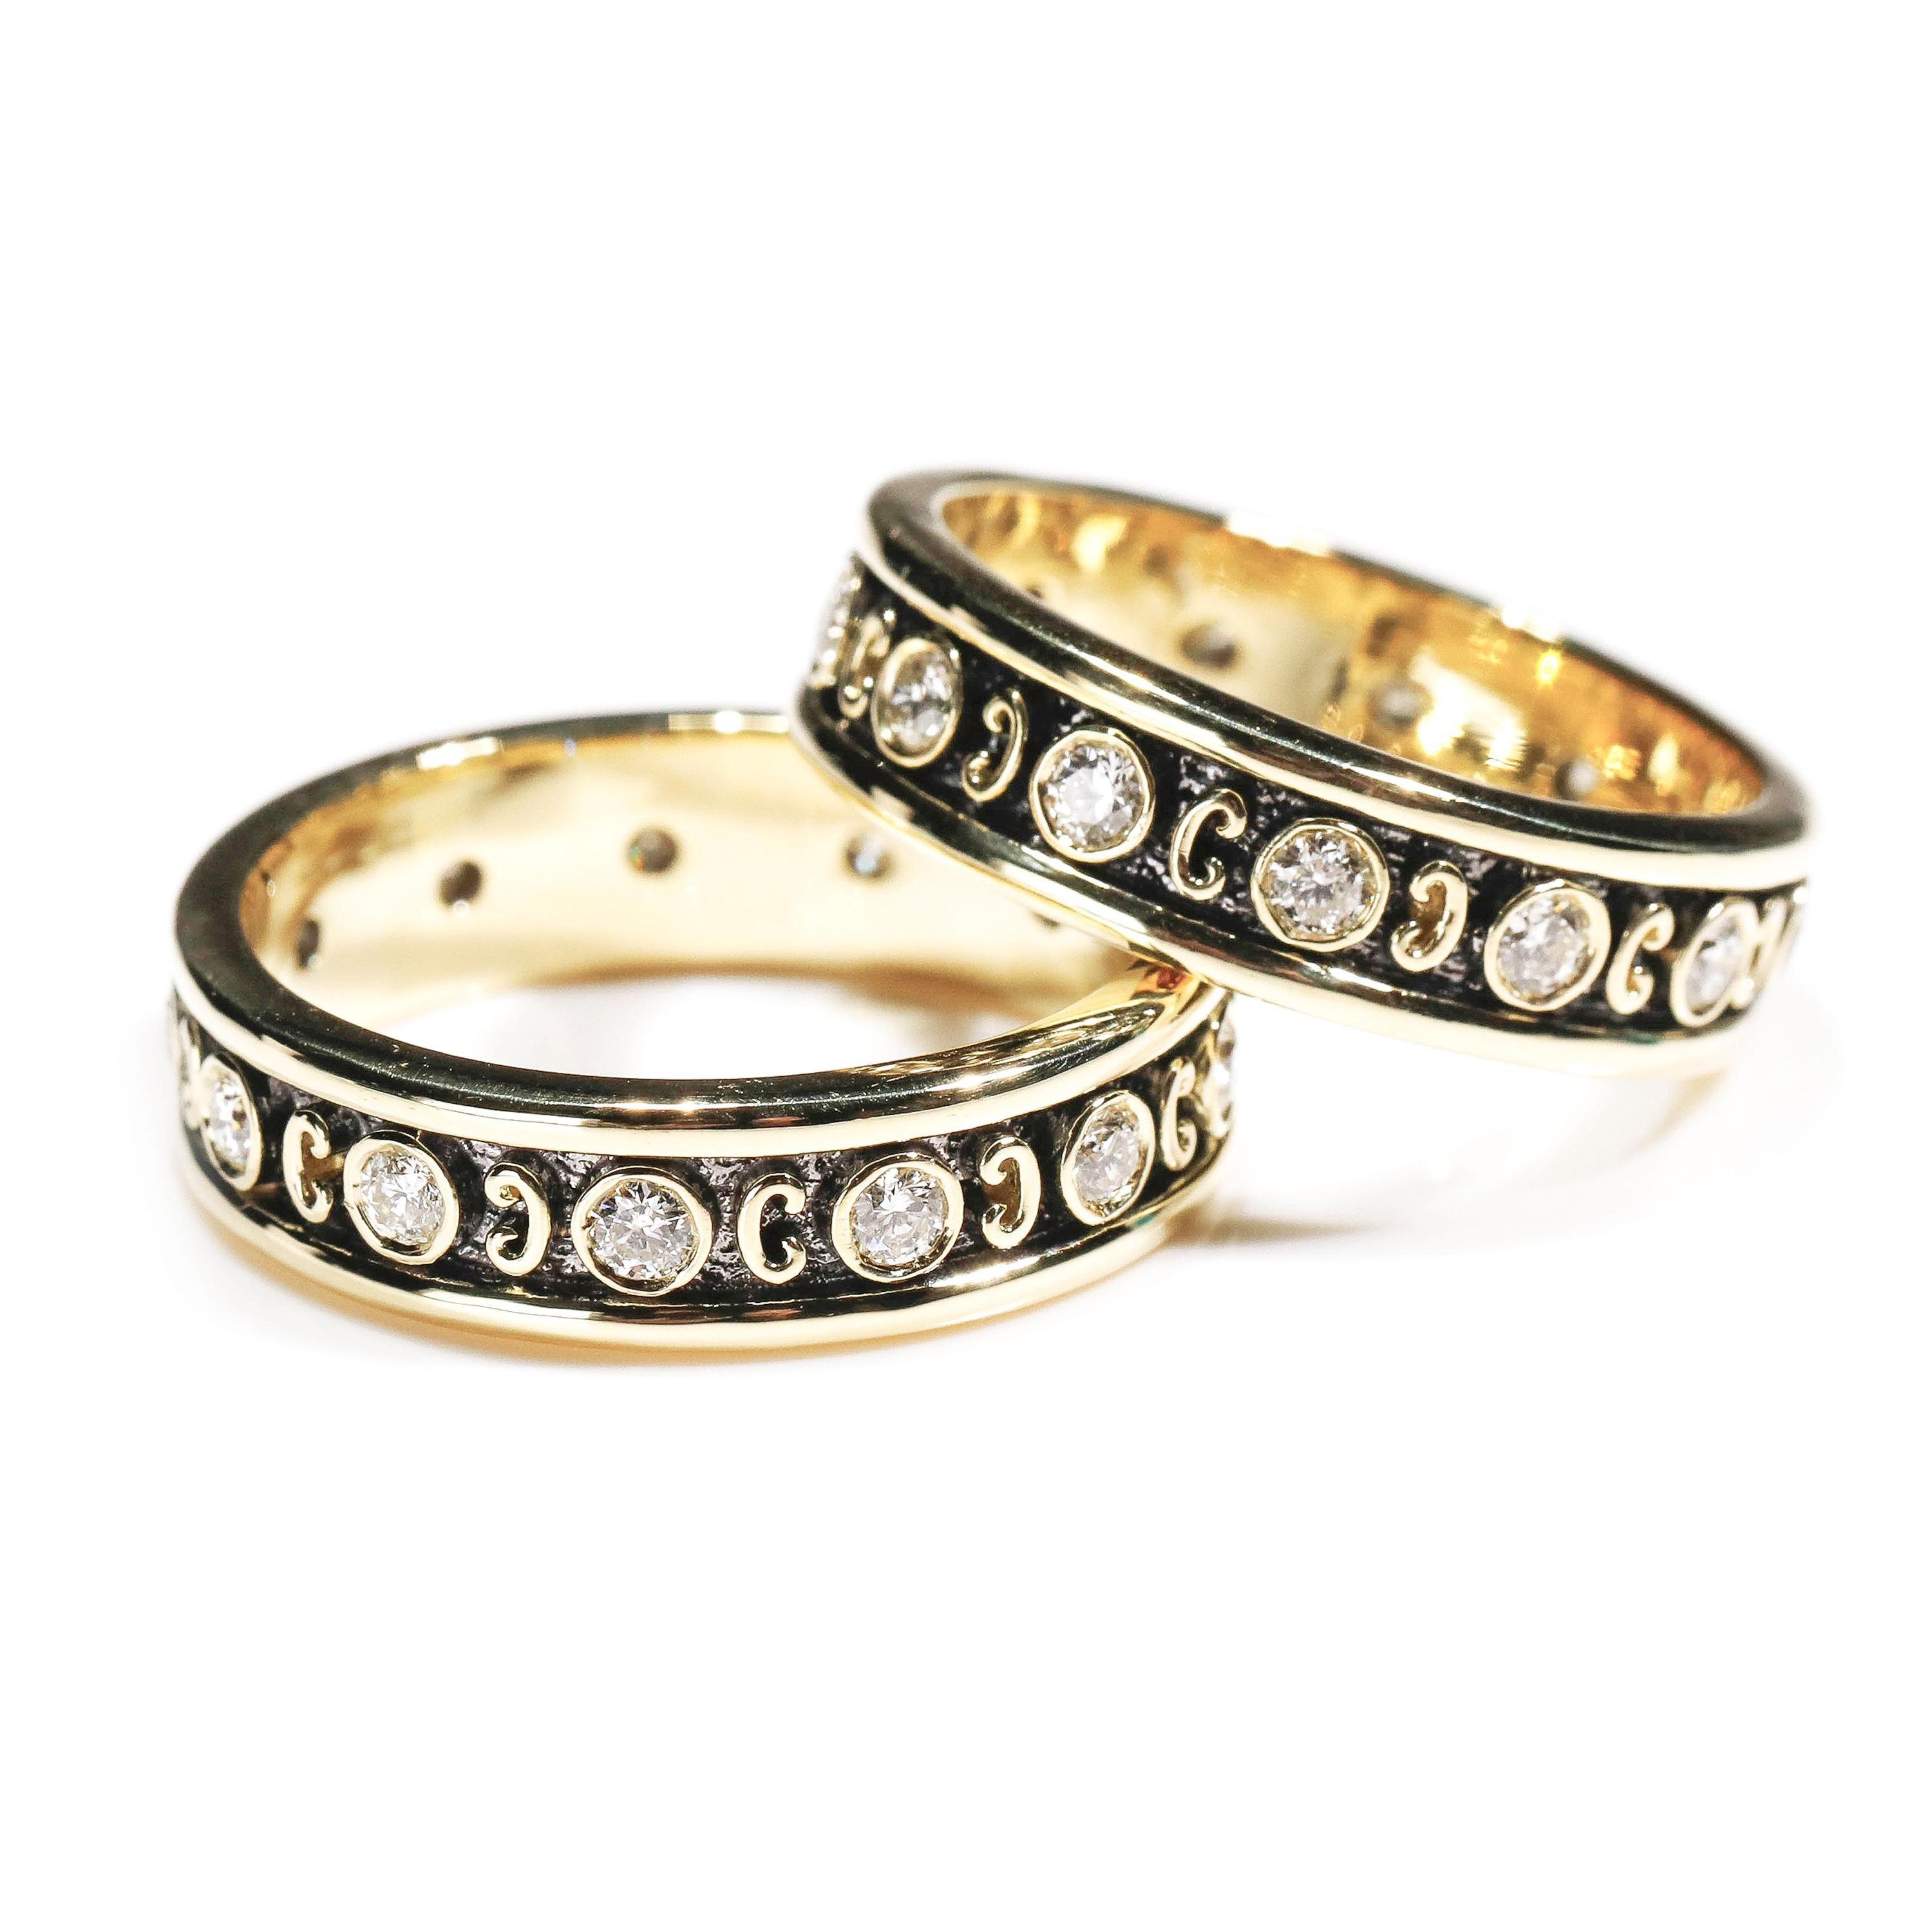 Contemporary 18 Karat Yellow Gold 0.80 Carat Round Cut Diamond Full Band Ring US Size 7